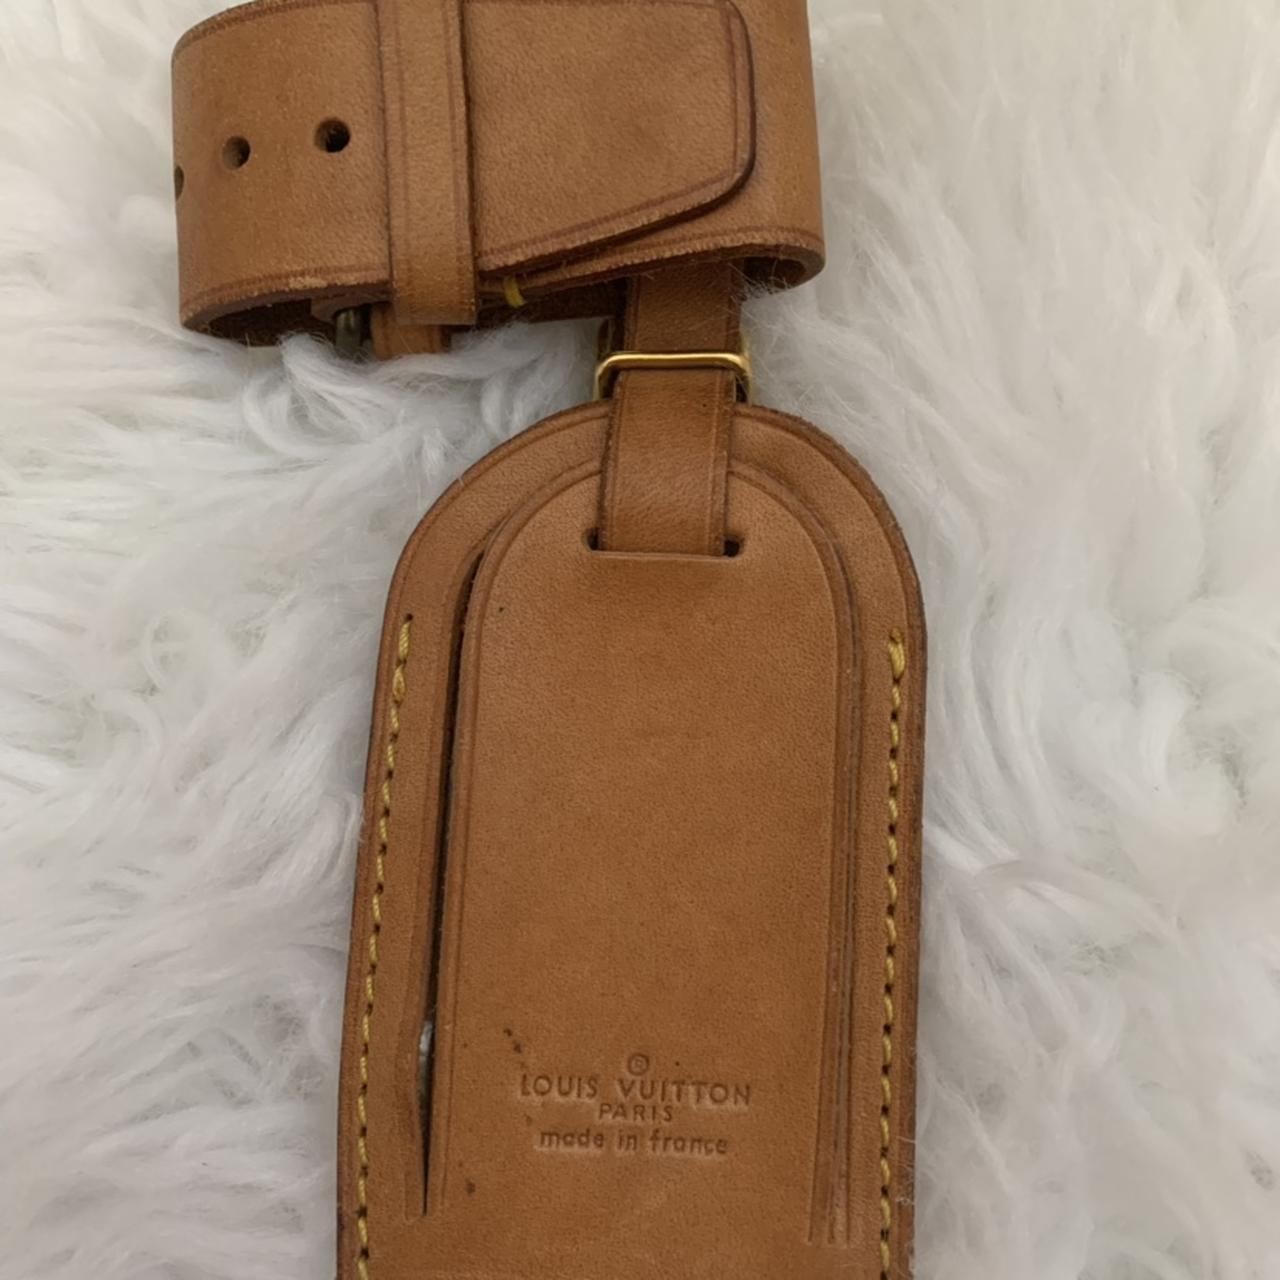 Authentic Louis Vuitton Vachetta leather luggage tag - Depop